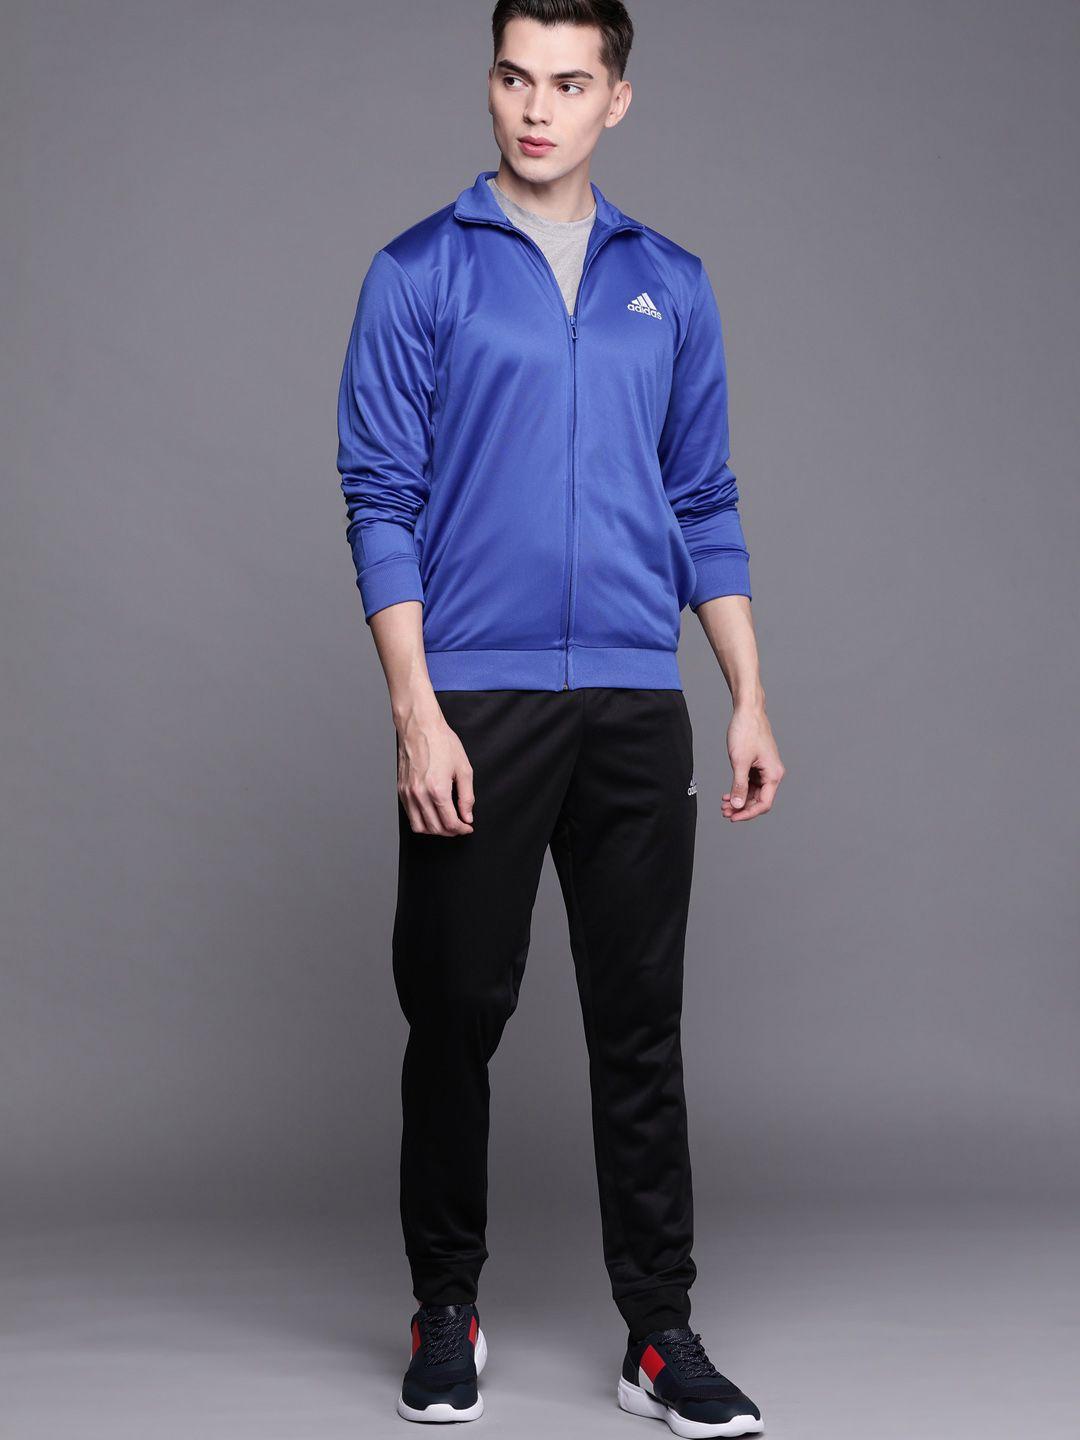 adidas-men-blue-&-black-solid-track-suit